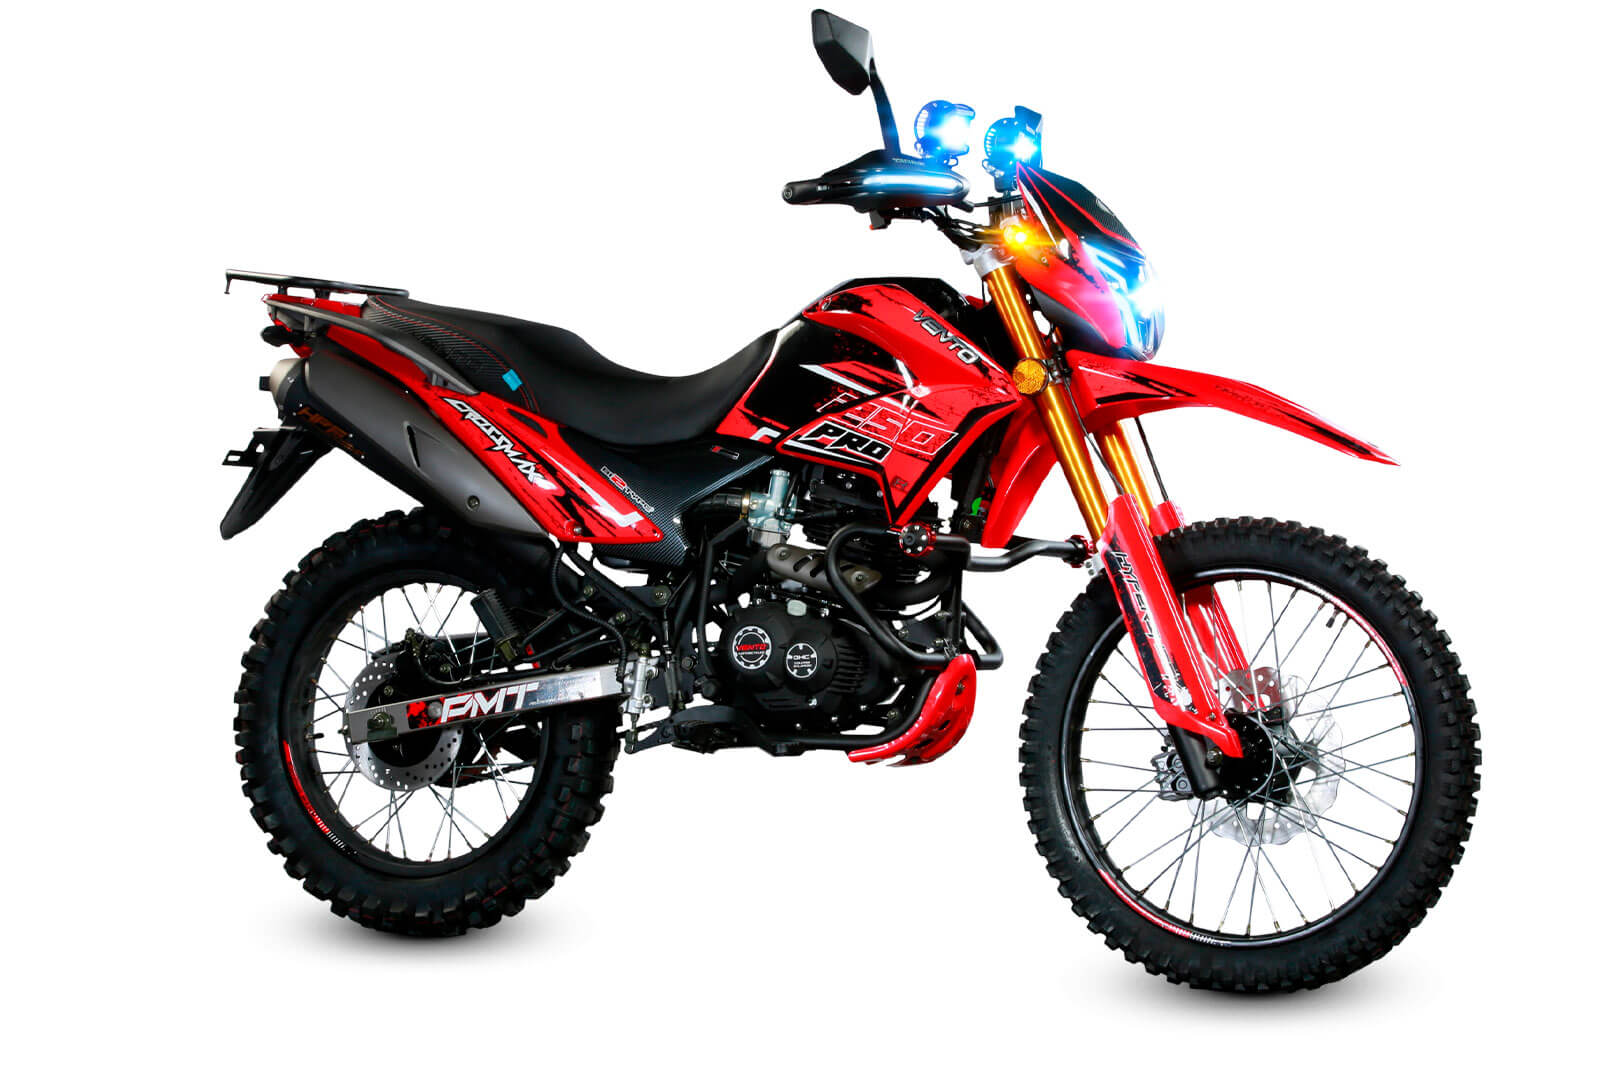 Crossmax 250 Pro Vento Motorcycles U.S.A │ Costa Rica